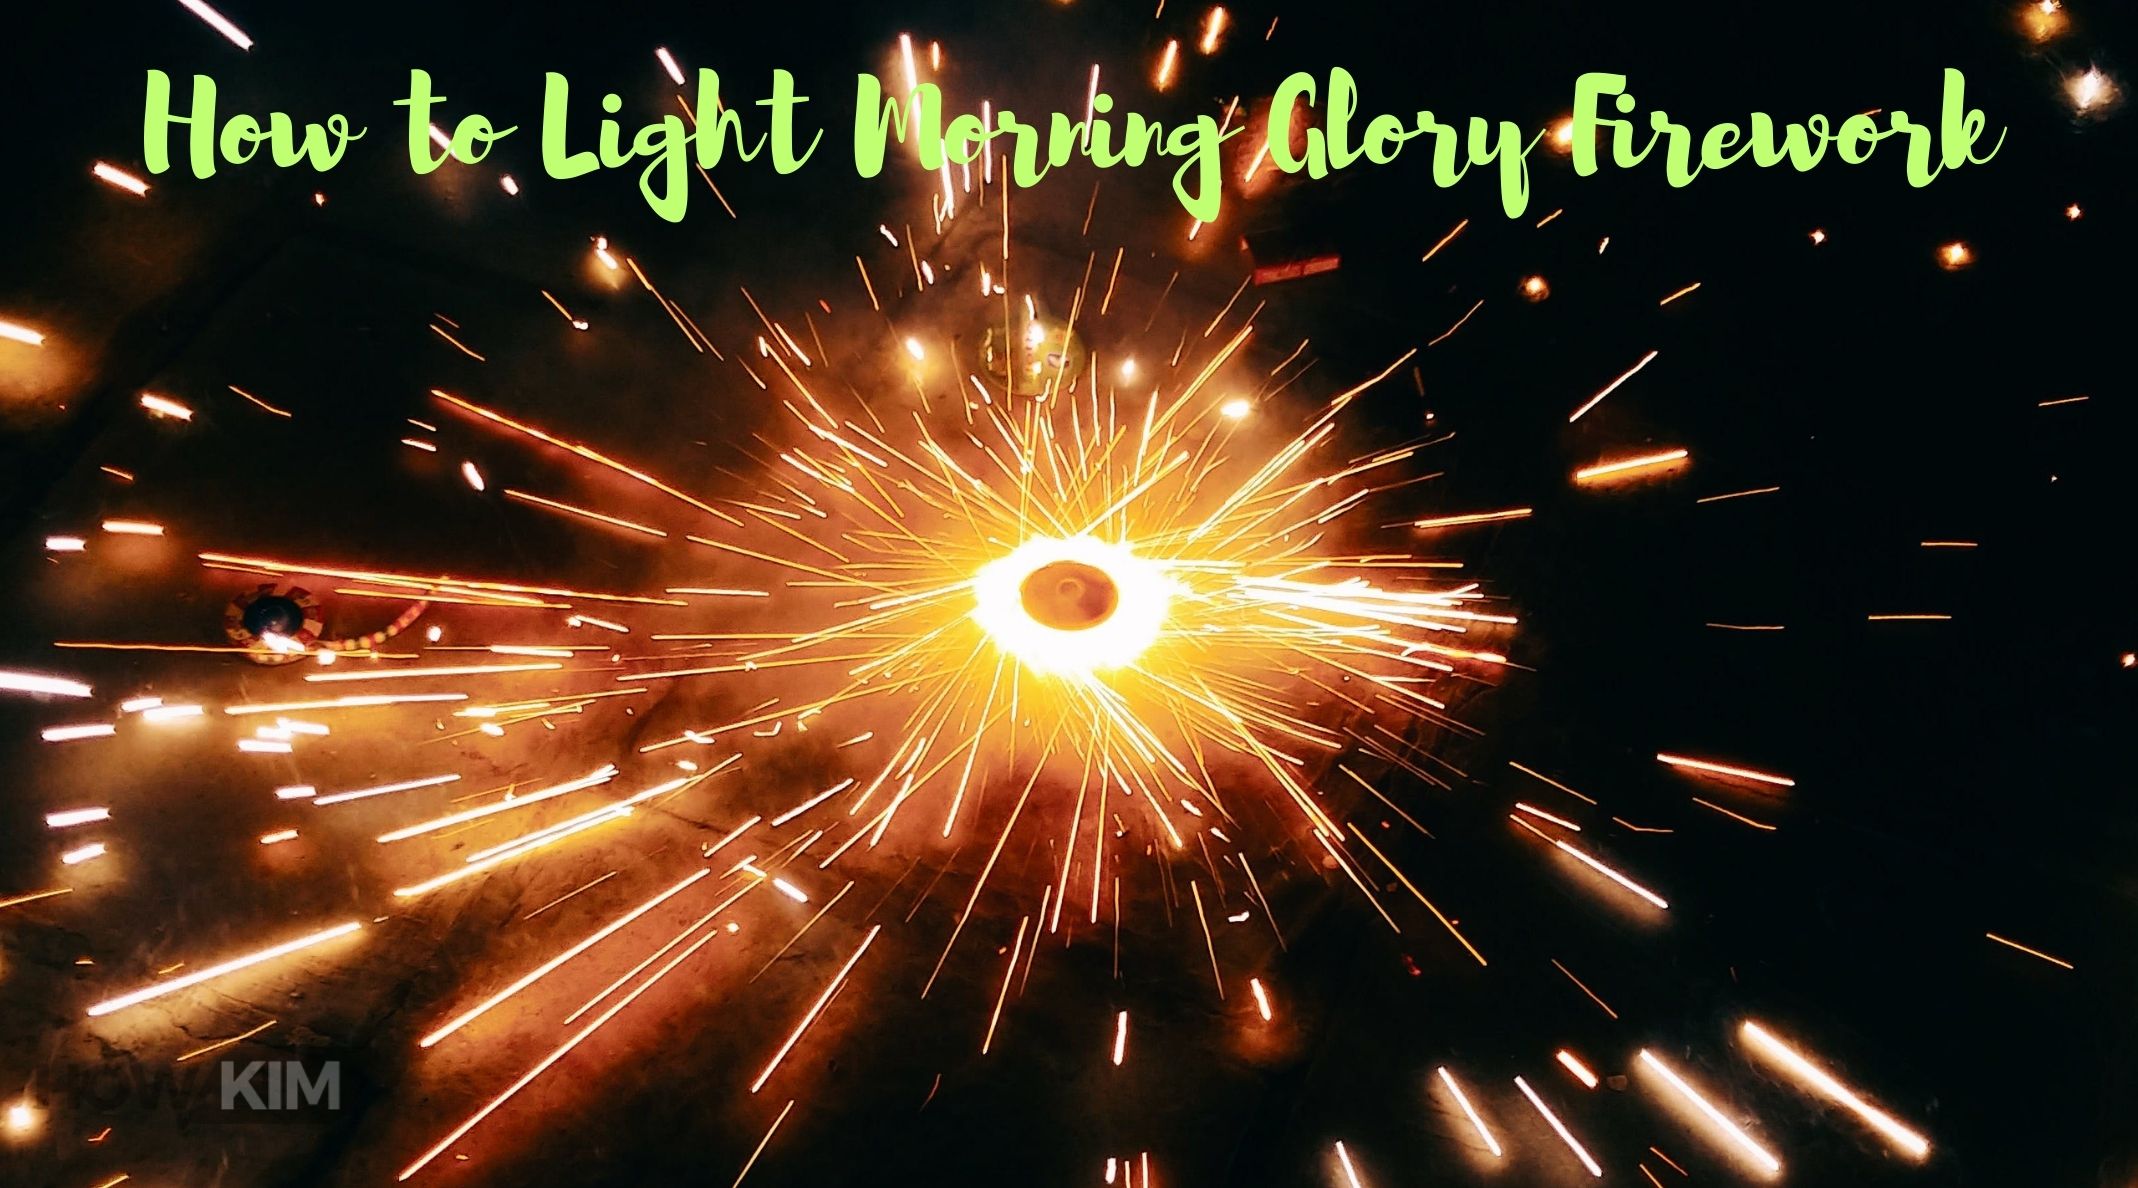 How to Light Morning Glory Firework